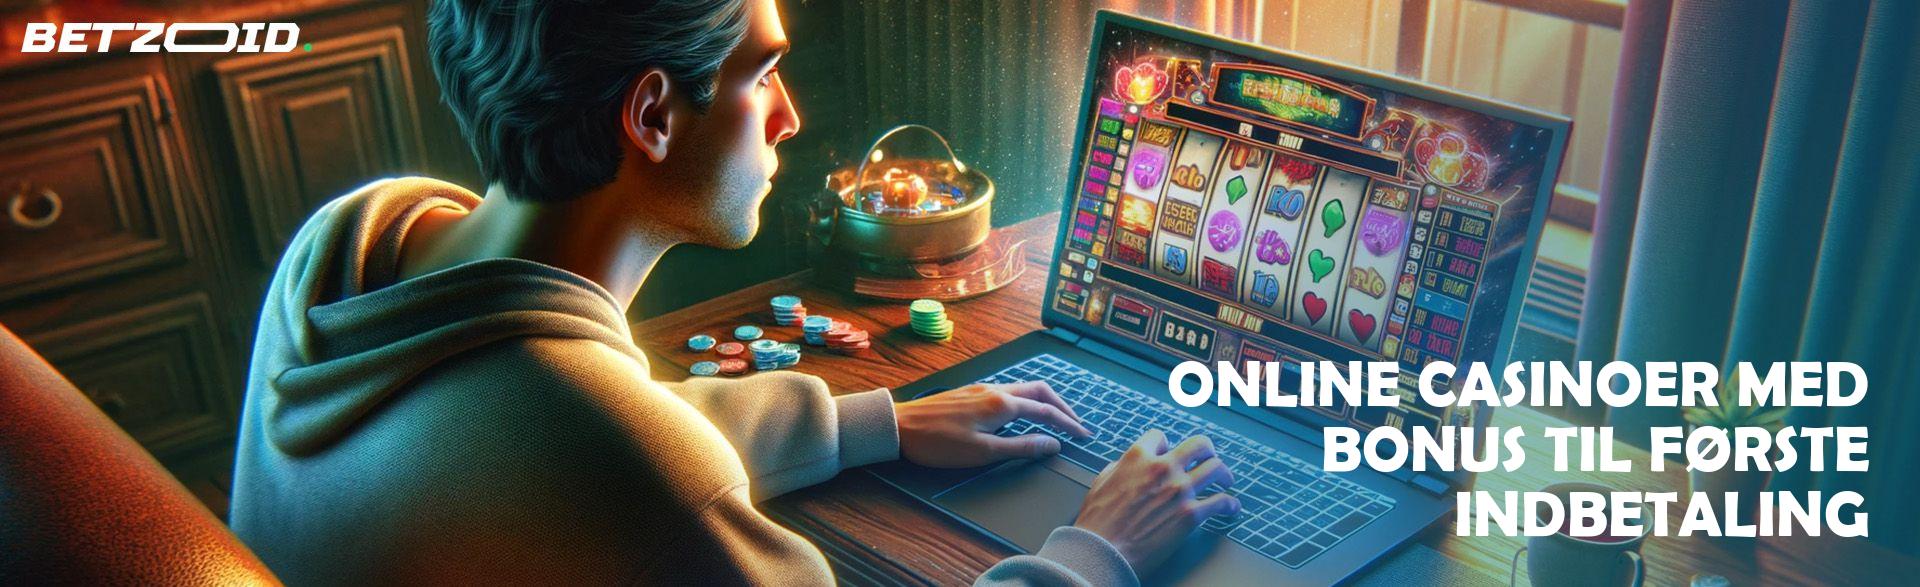 Online Casinoer med Bonus til Første Indbetaling.